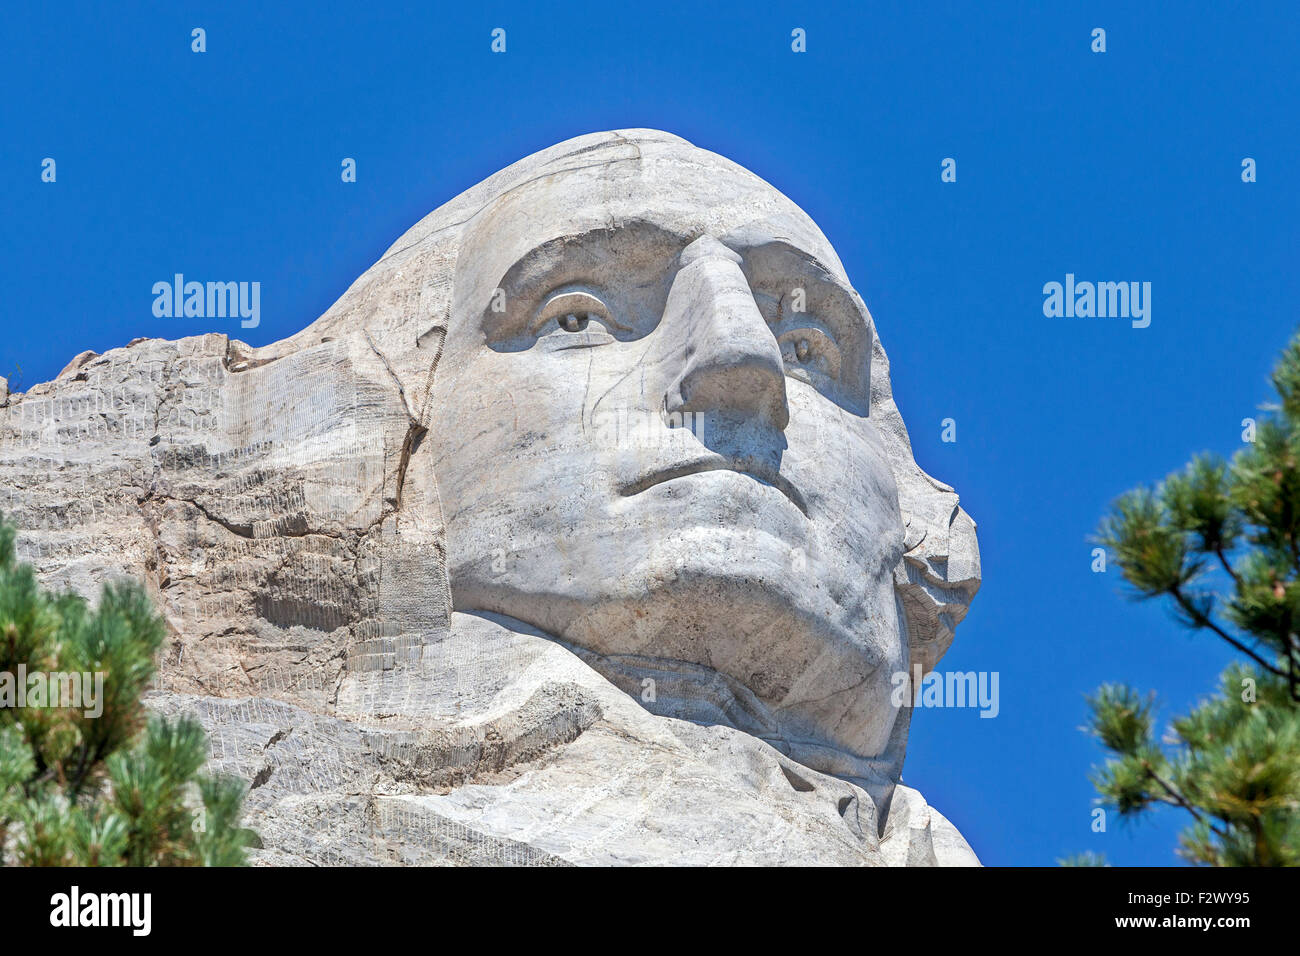 A view of George Washington on Mount Rushmore National Memorial, South Dakota. Stock Photo